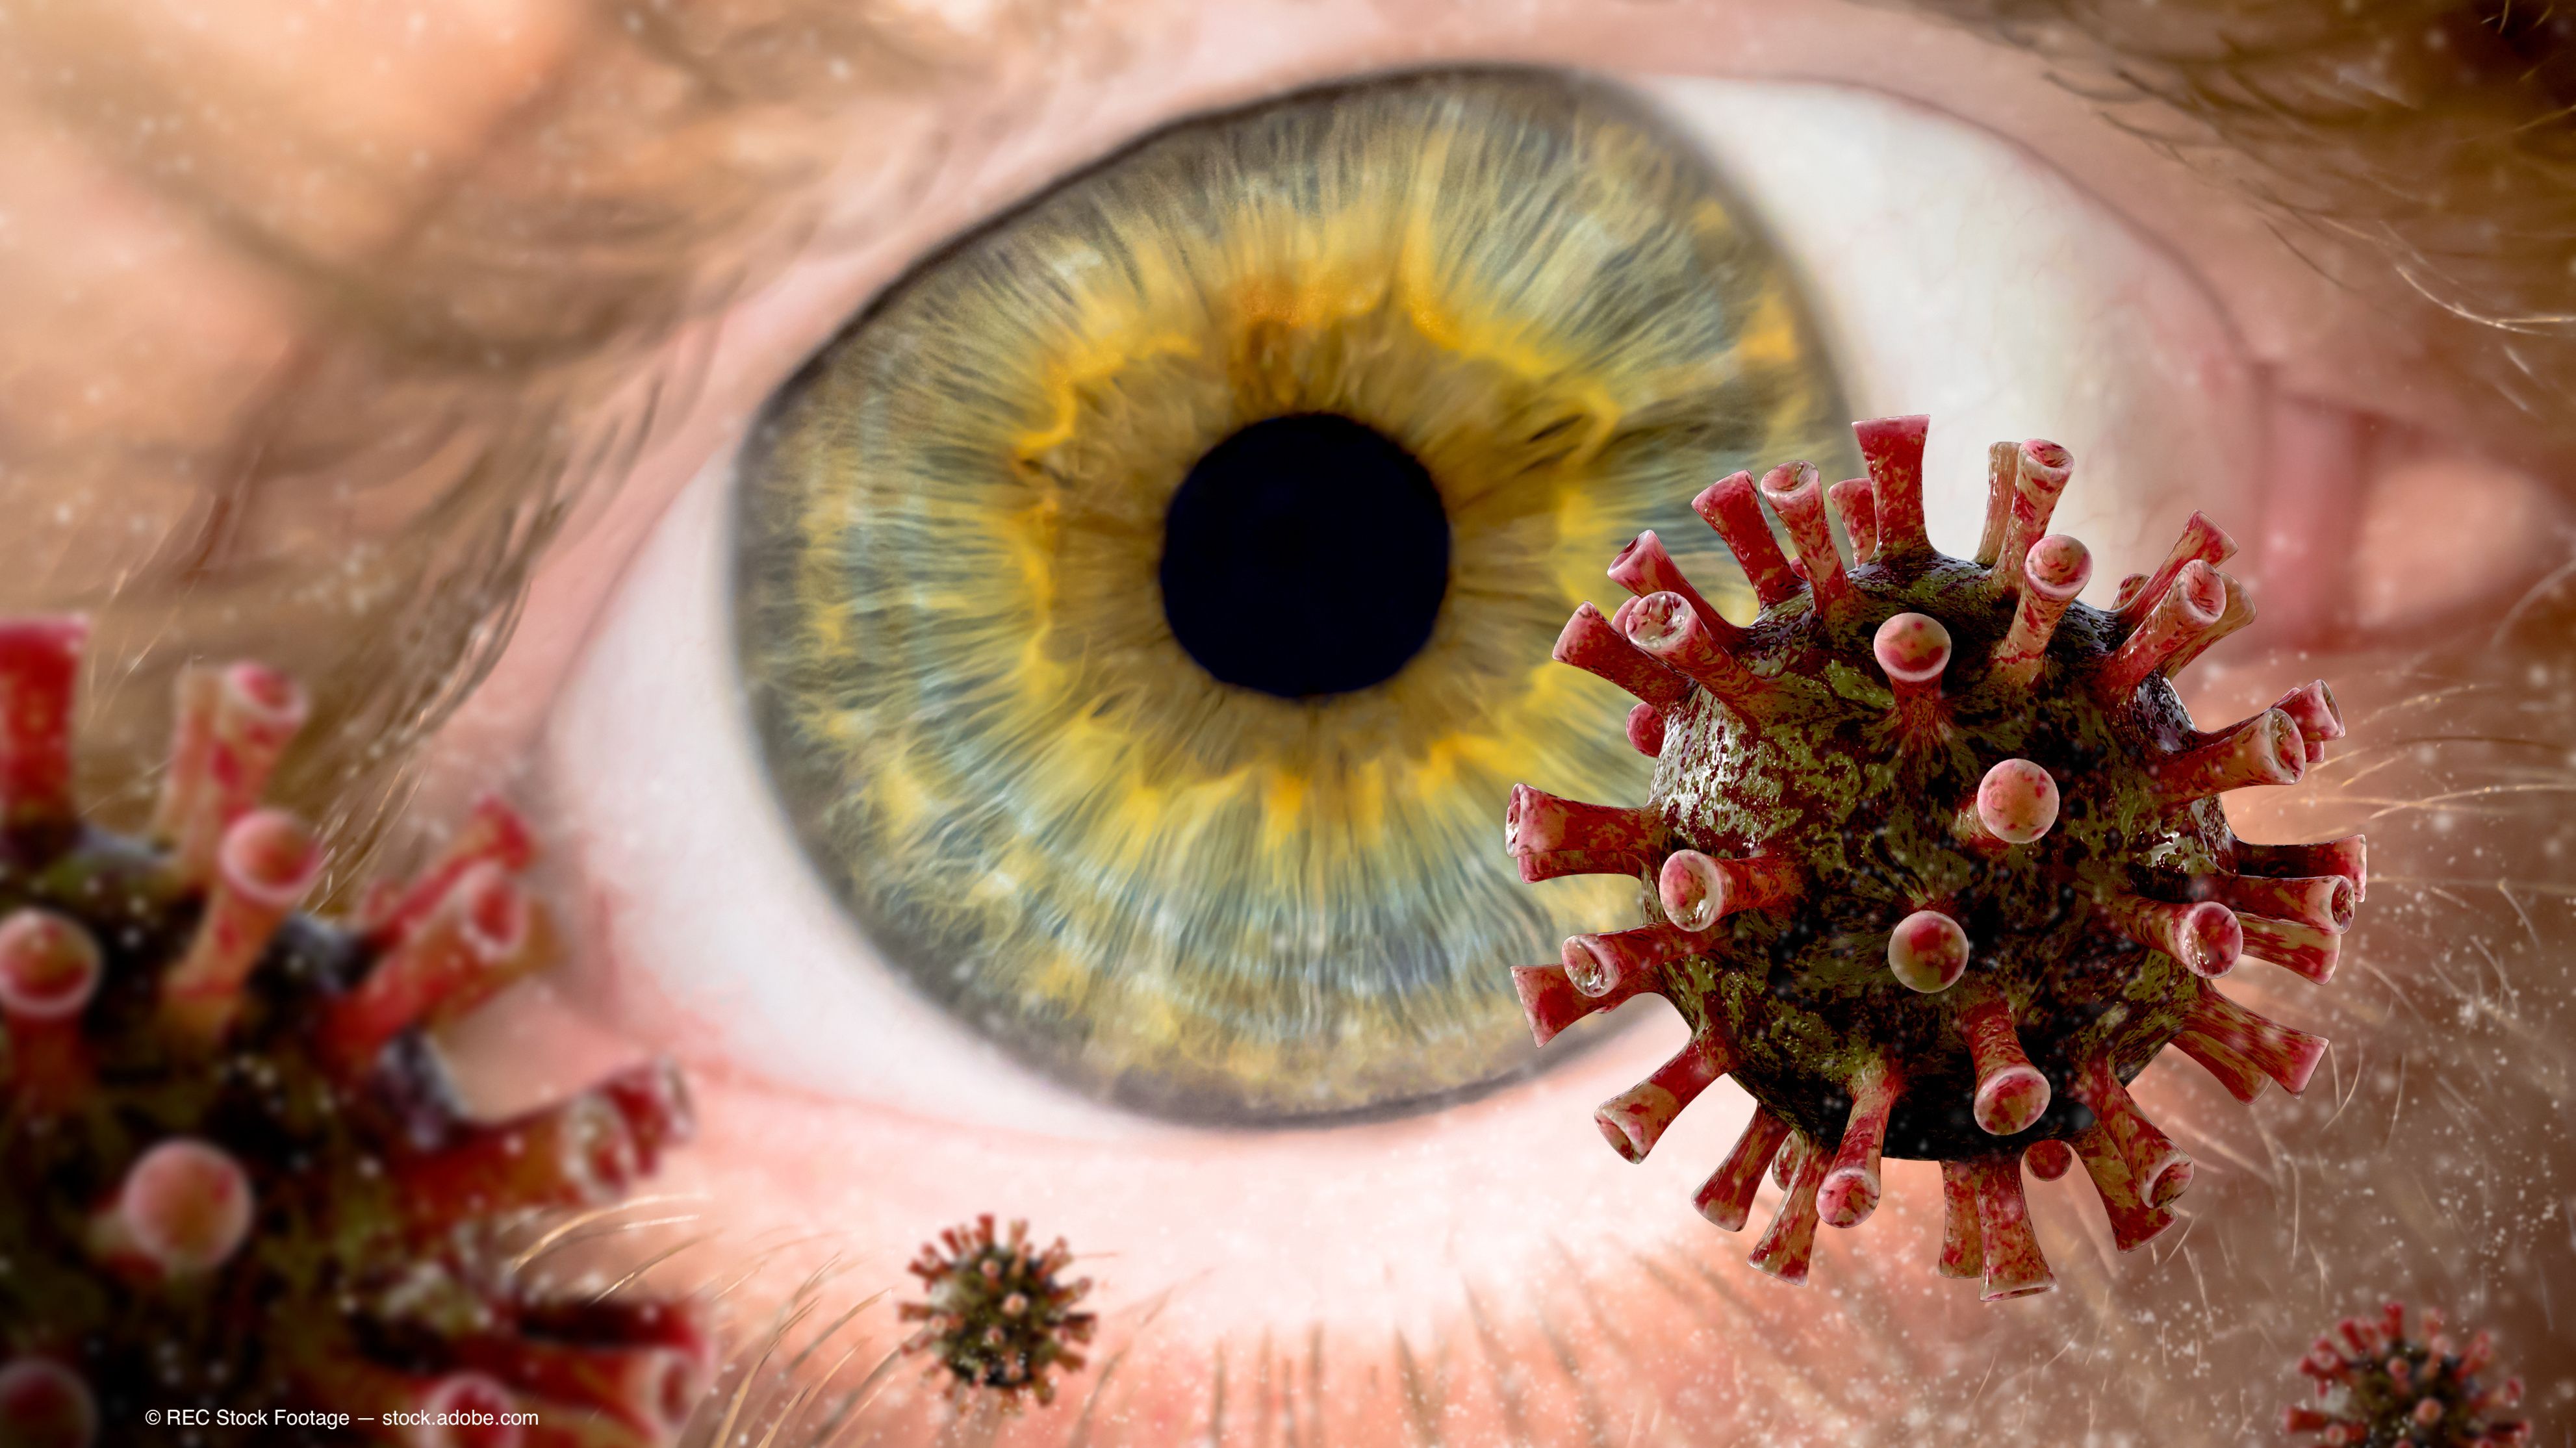 COVID-19: ocular symptoms analyzed in symptomatic patients